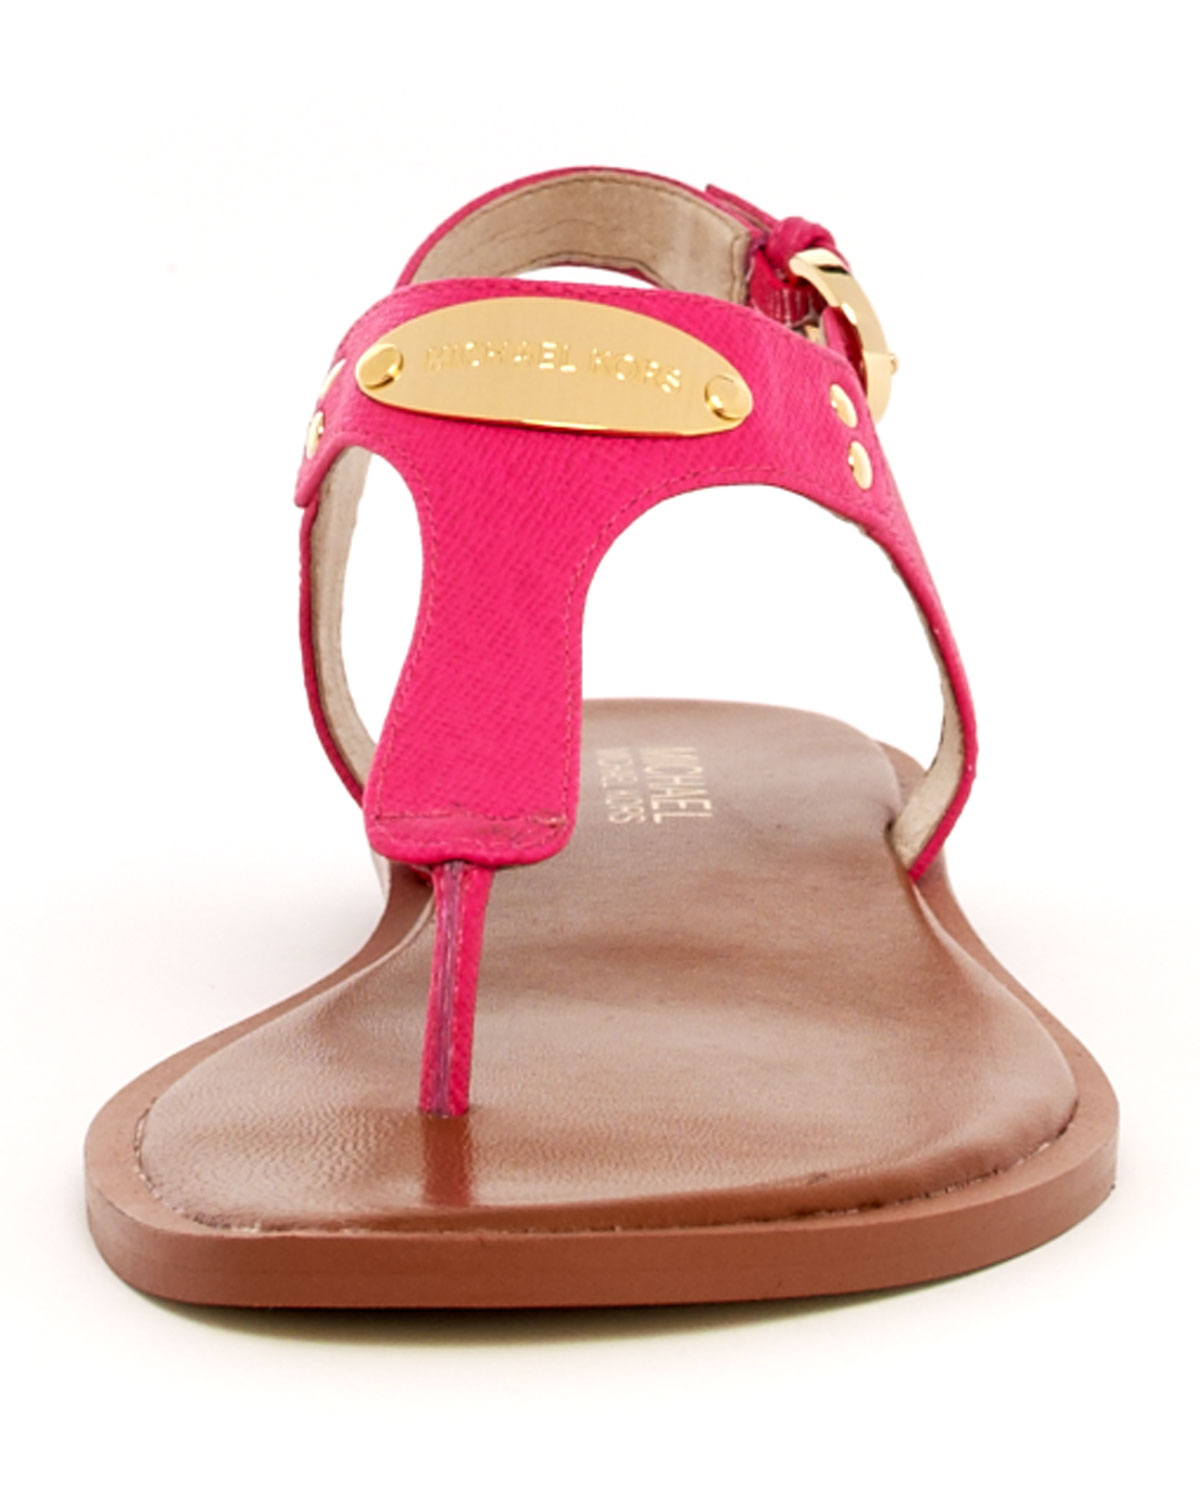 Michael Kors Plate Thong Sandal in Pink - Lyst